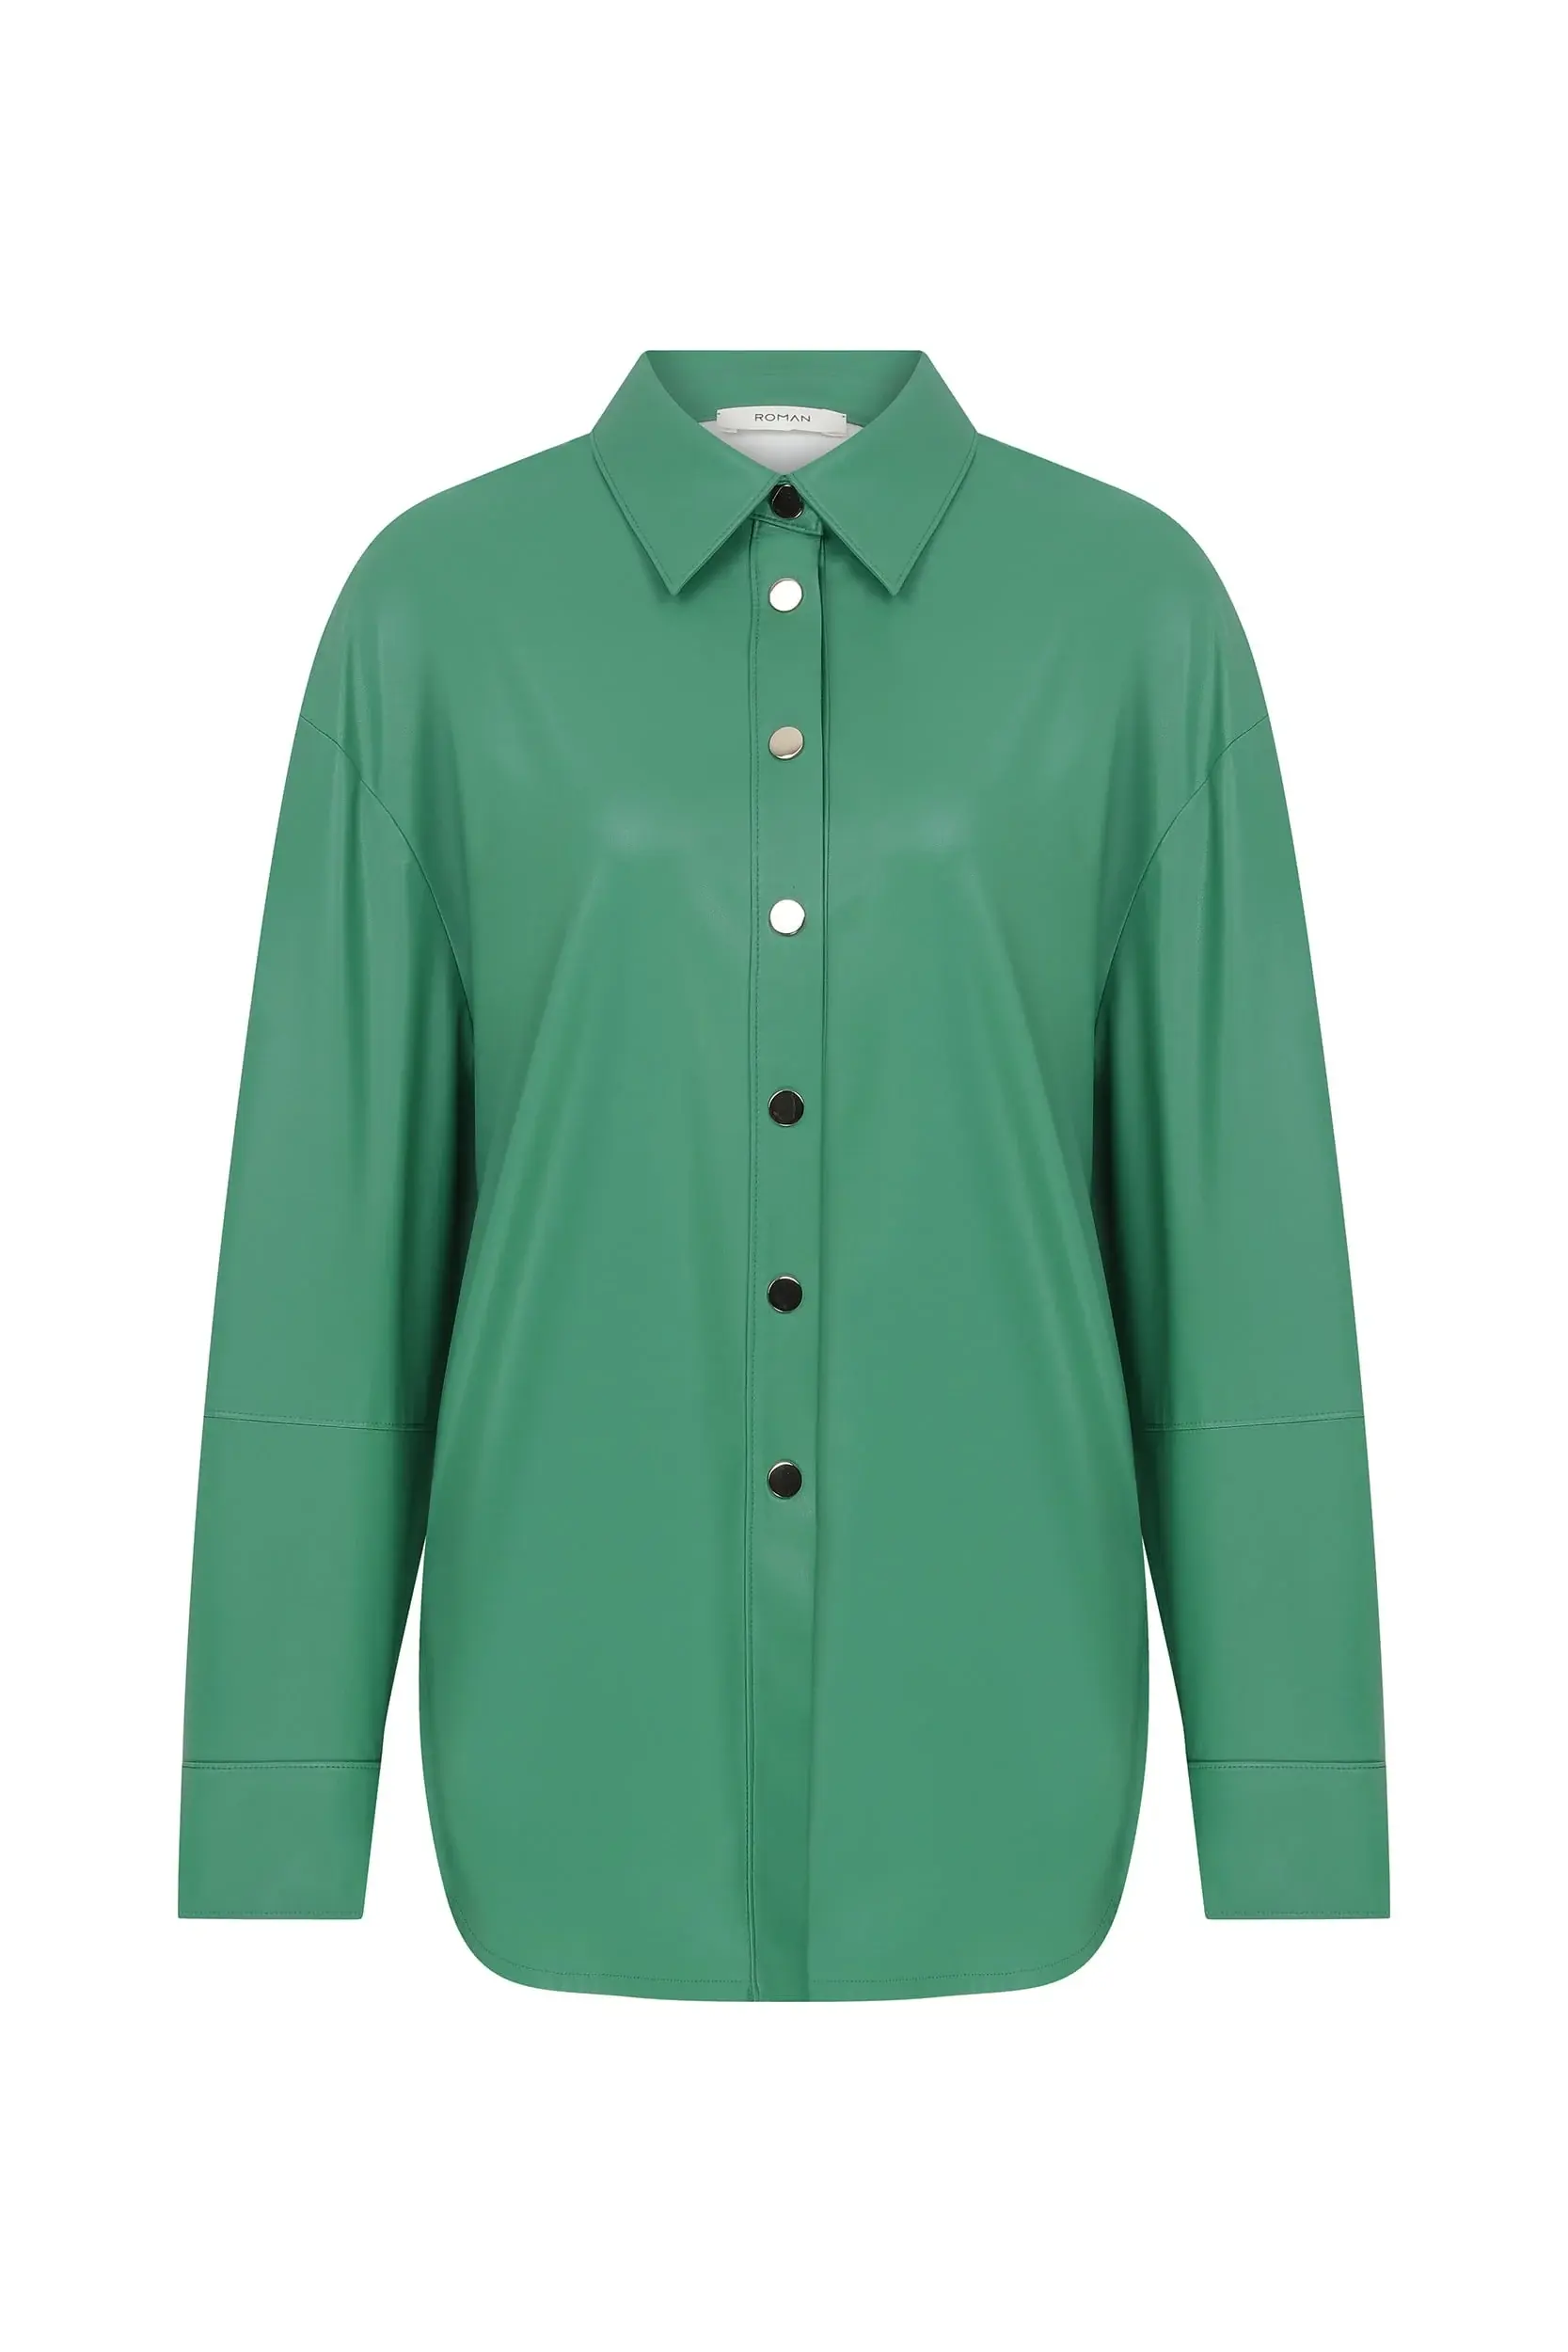 Roman Leather Look Green Women's Shirt - 4 / Green. 1